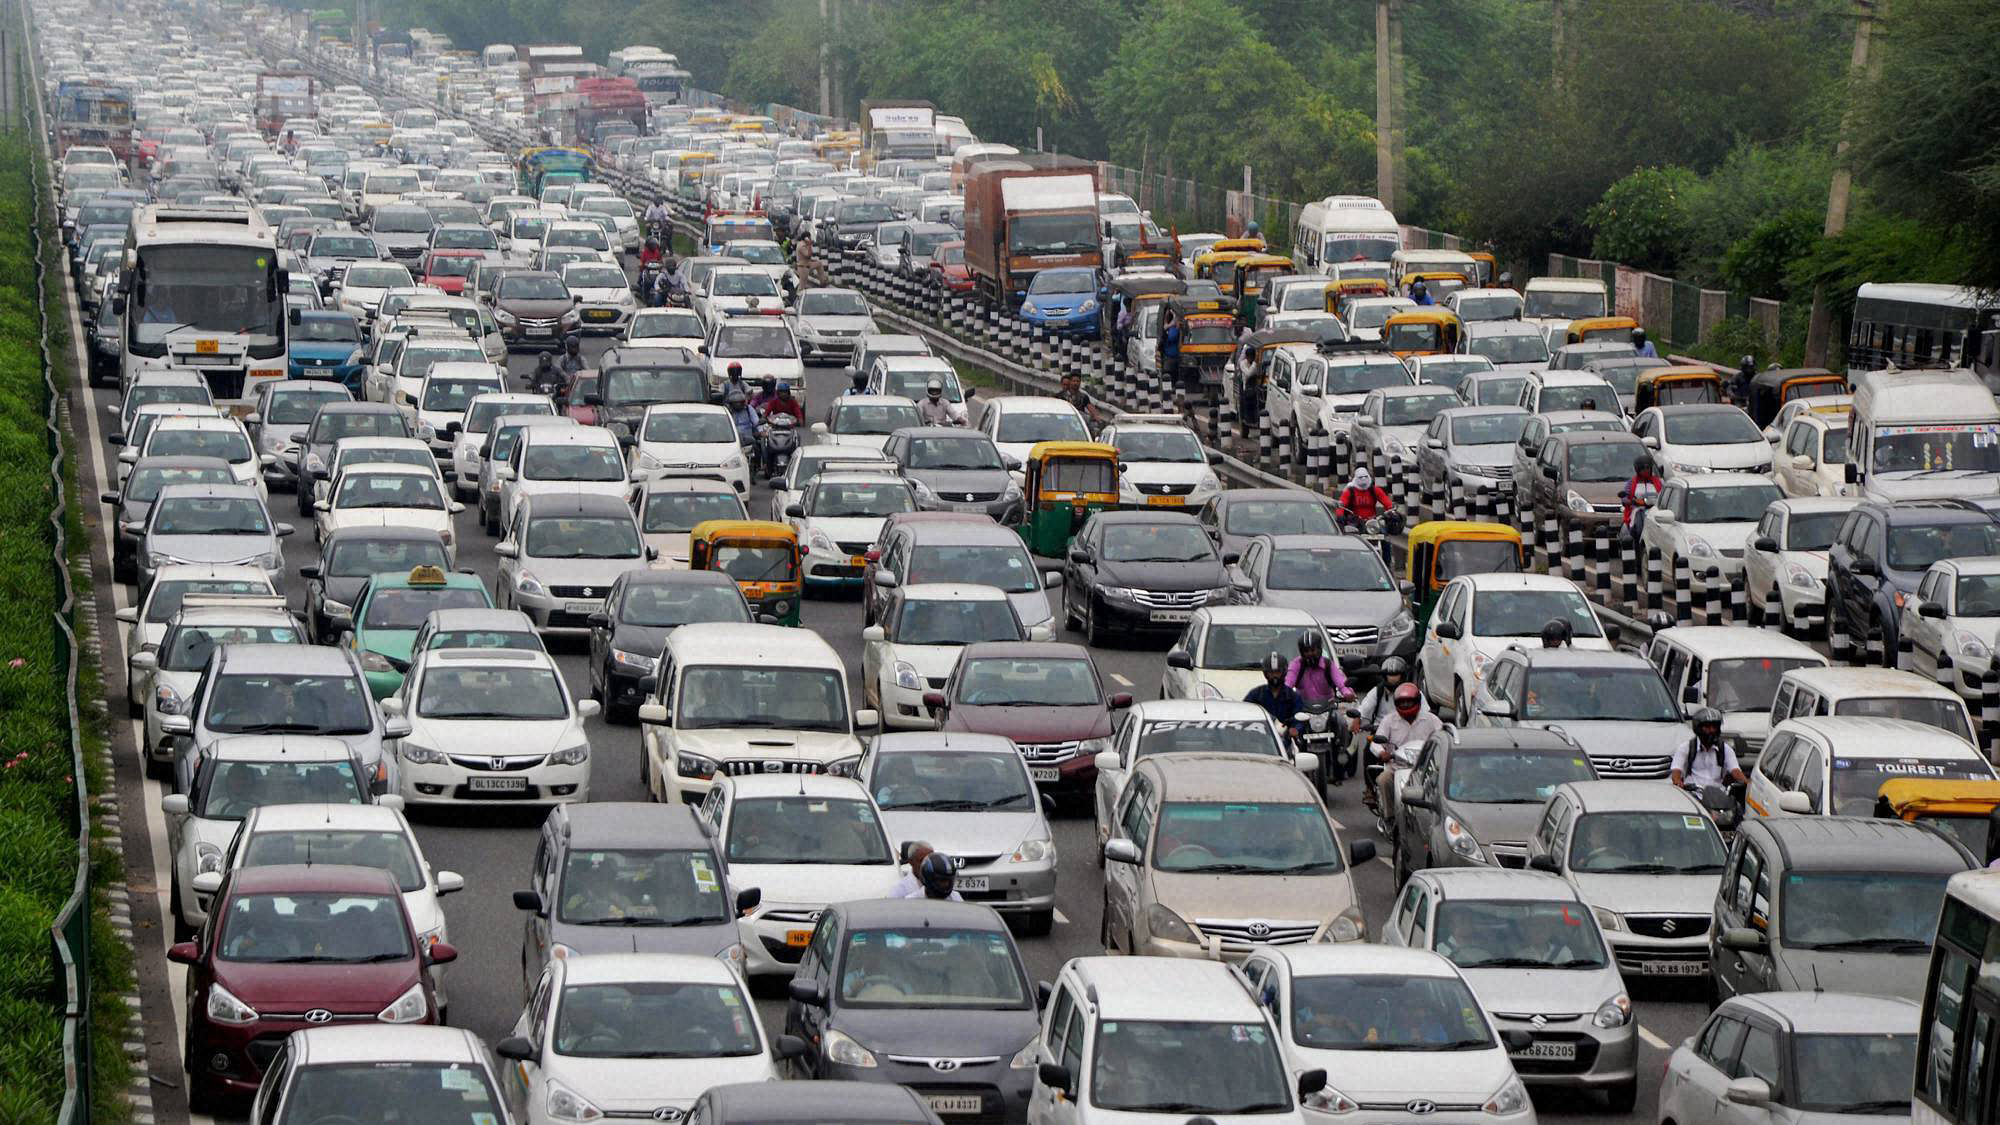 <div class="paragraphs"><p>Commuters stuck in heavy traffic jam. </p></div>